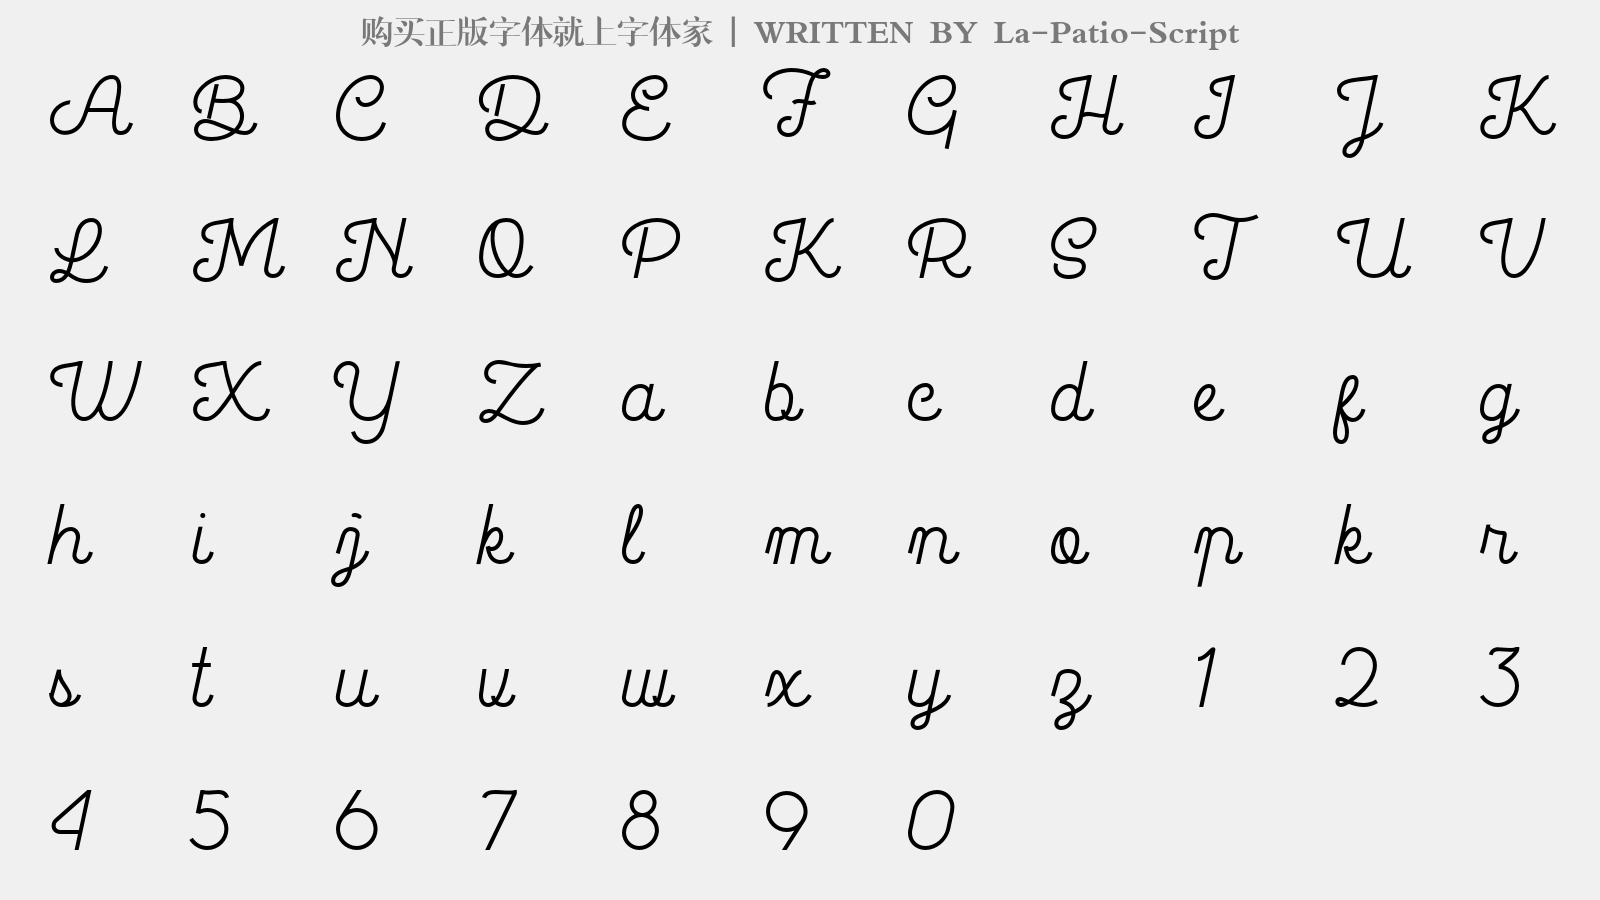 La-Patio-Script - 大写字母/小写字母/数字